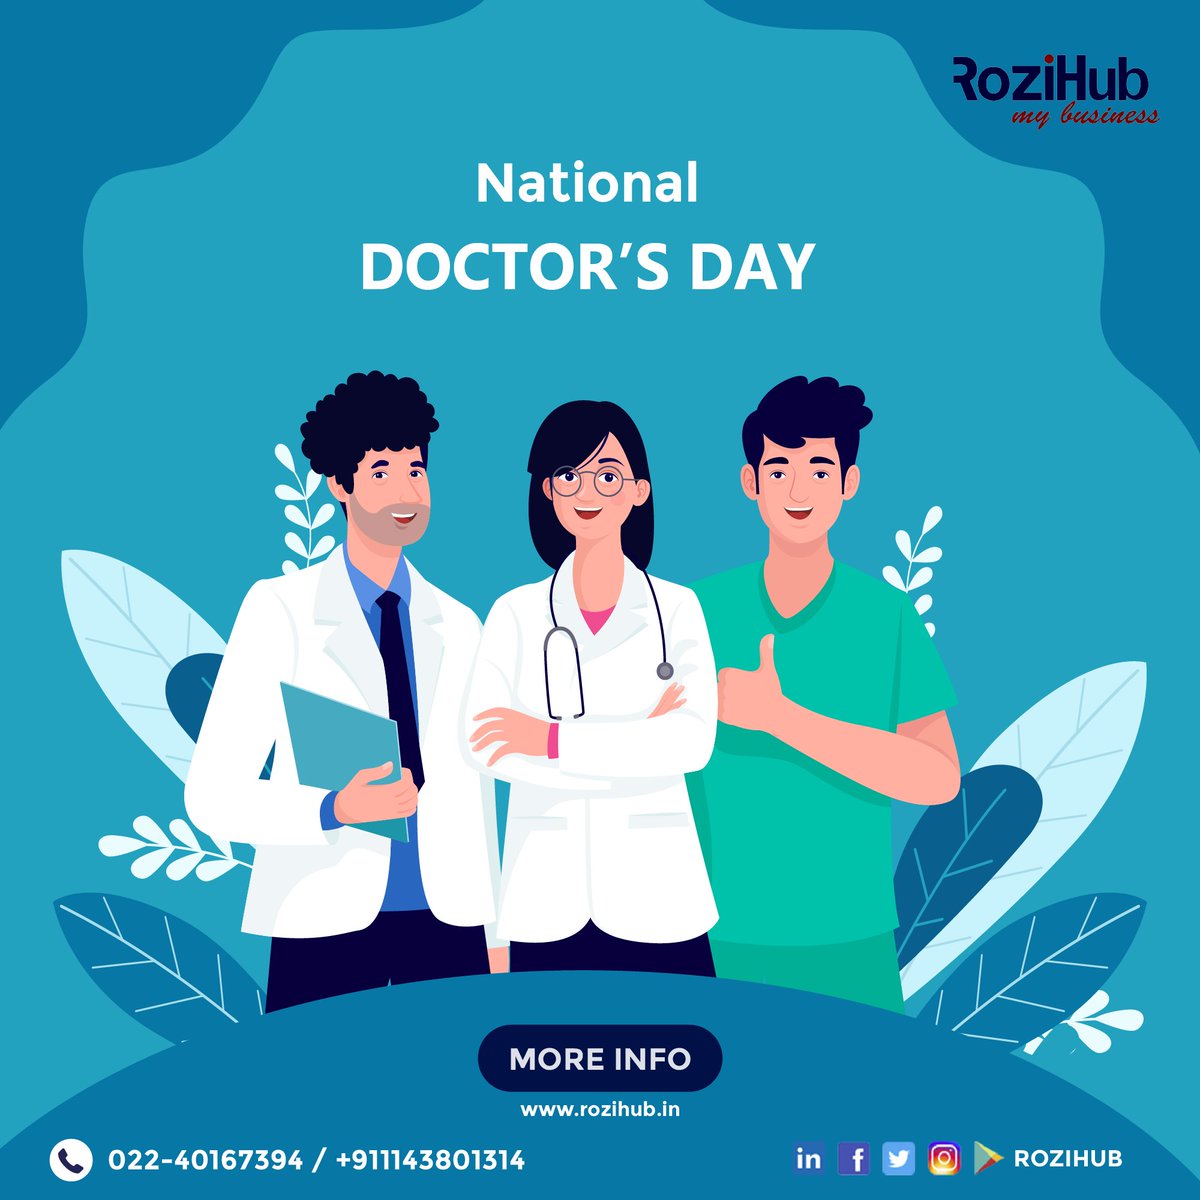 NATIONAL DOCTOR'S DAY
#doctorsday #doctors #doctor #doctorslife #nationaldoctorsday #medical #medicine #doctorsoffice #covid #happydoctorsday #doctorswithoutborders #doctorlife